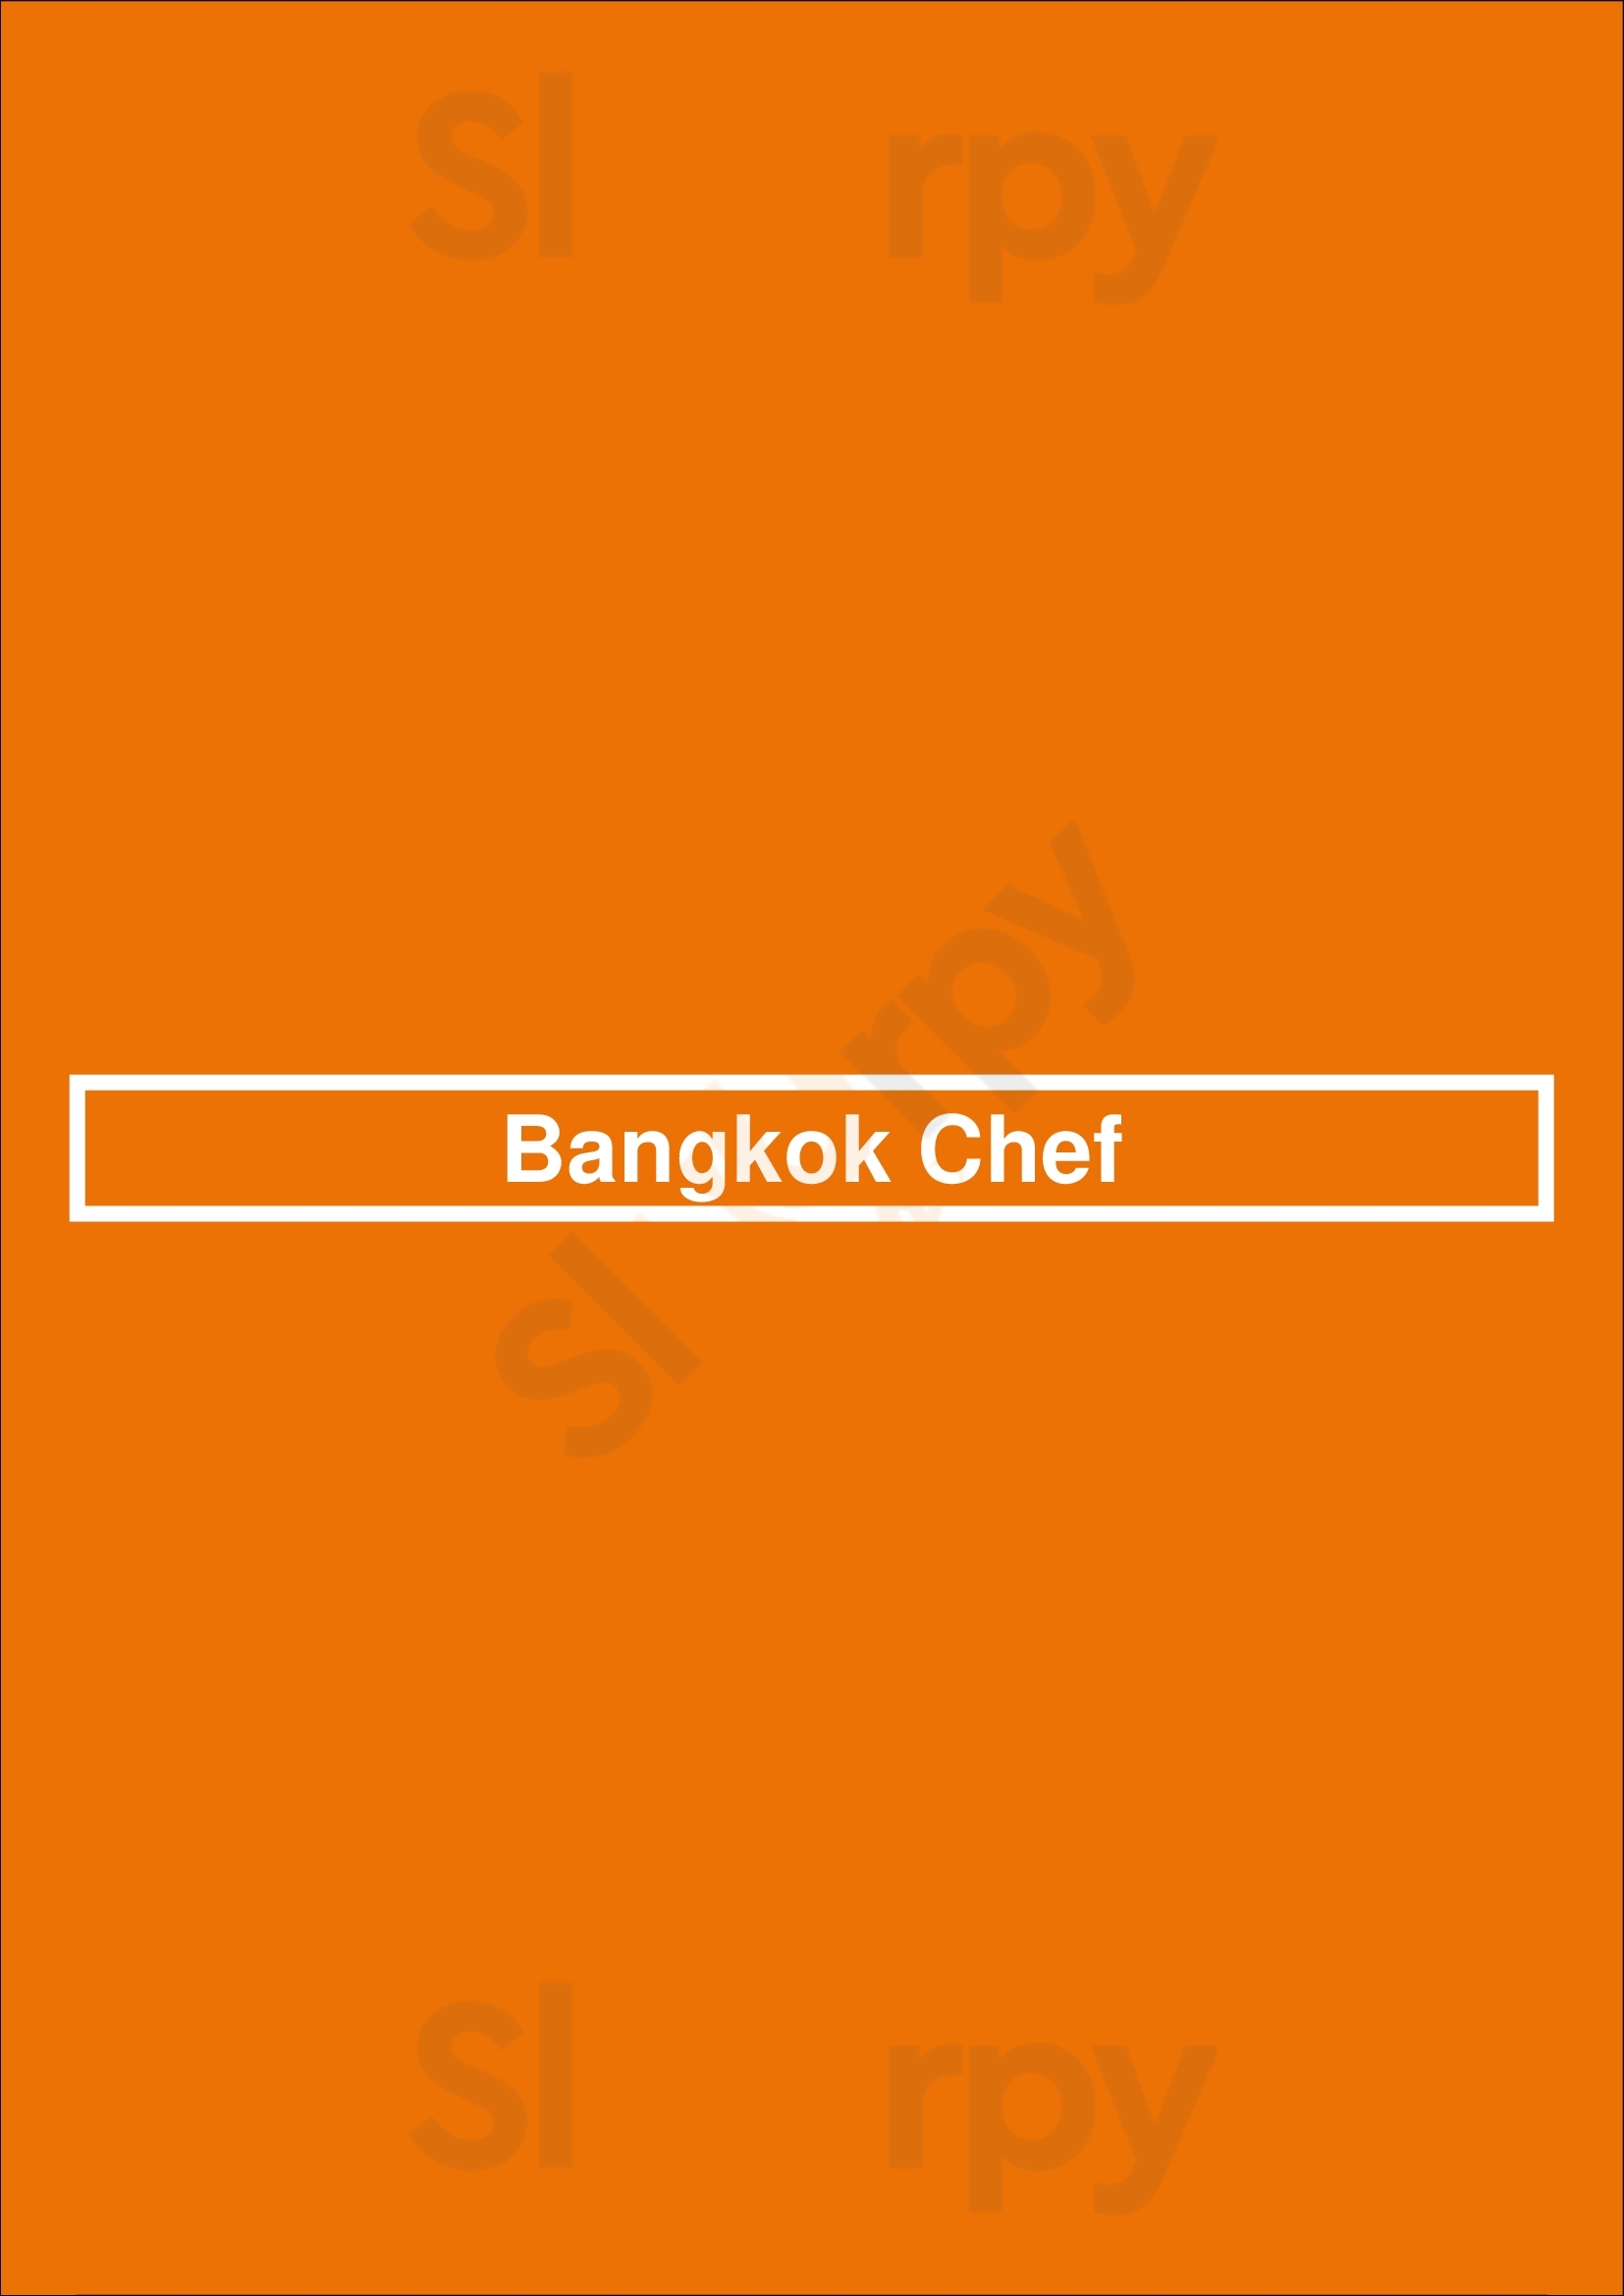 Bangkok Chef Honolulu Menu - 1